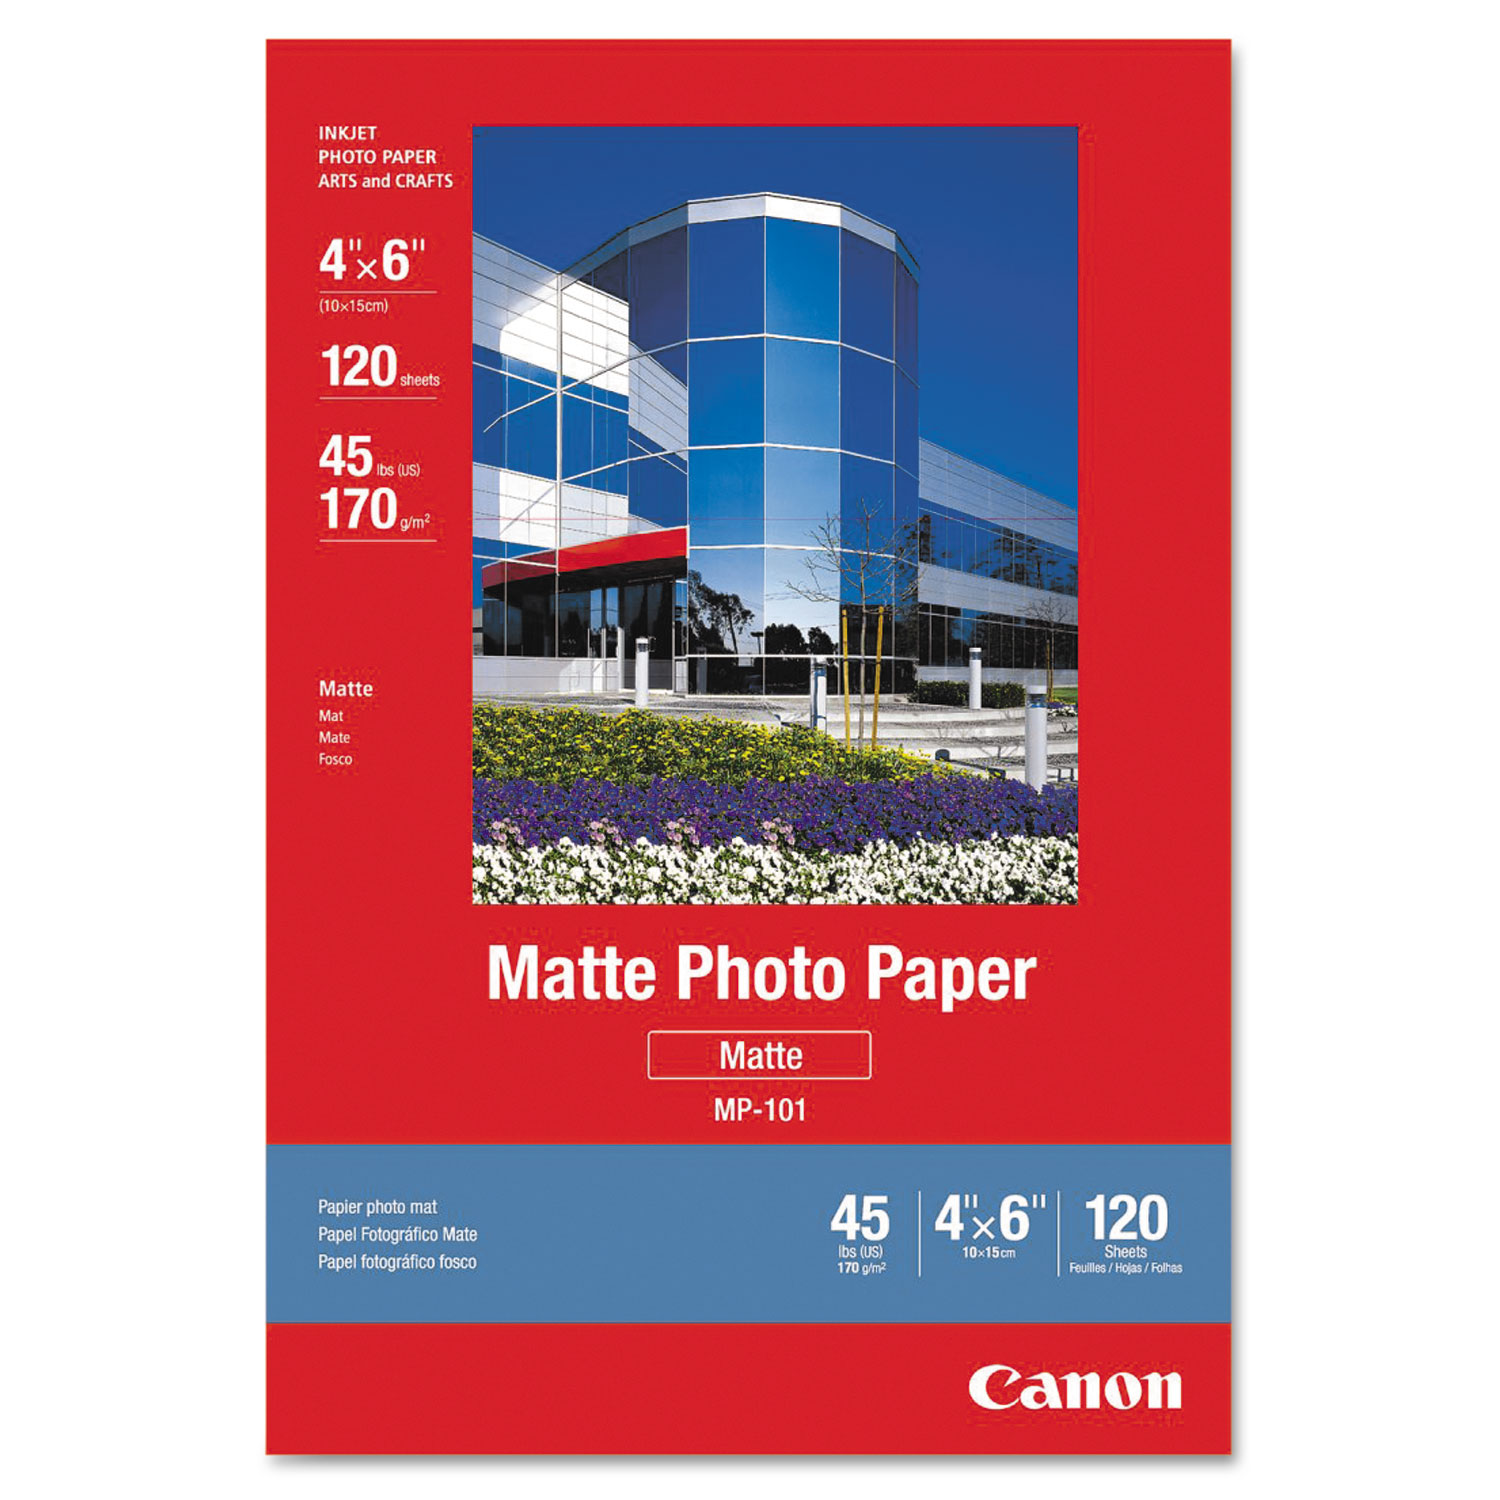 Matte Photo Paper, 4 x 6, 45 lb., White, 120 Sheets/Pack